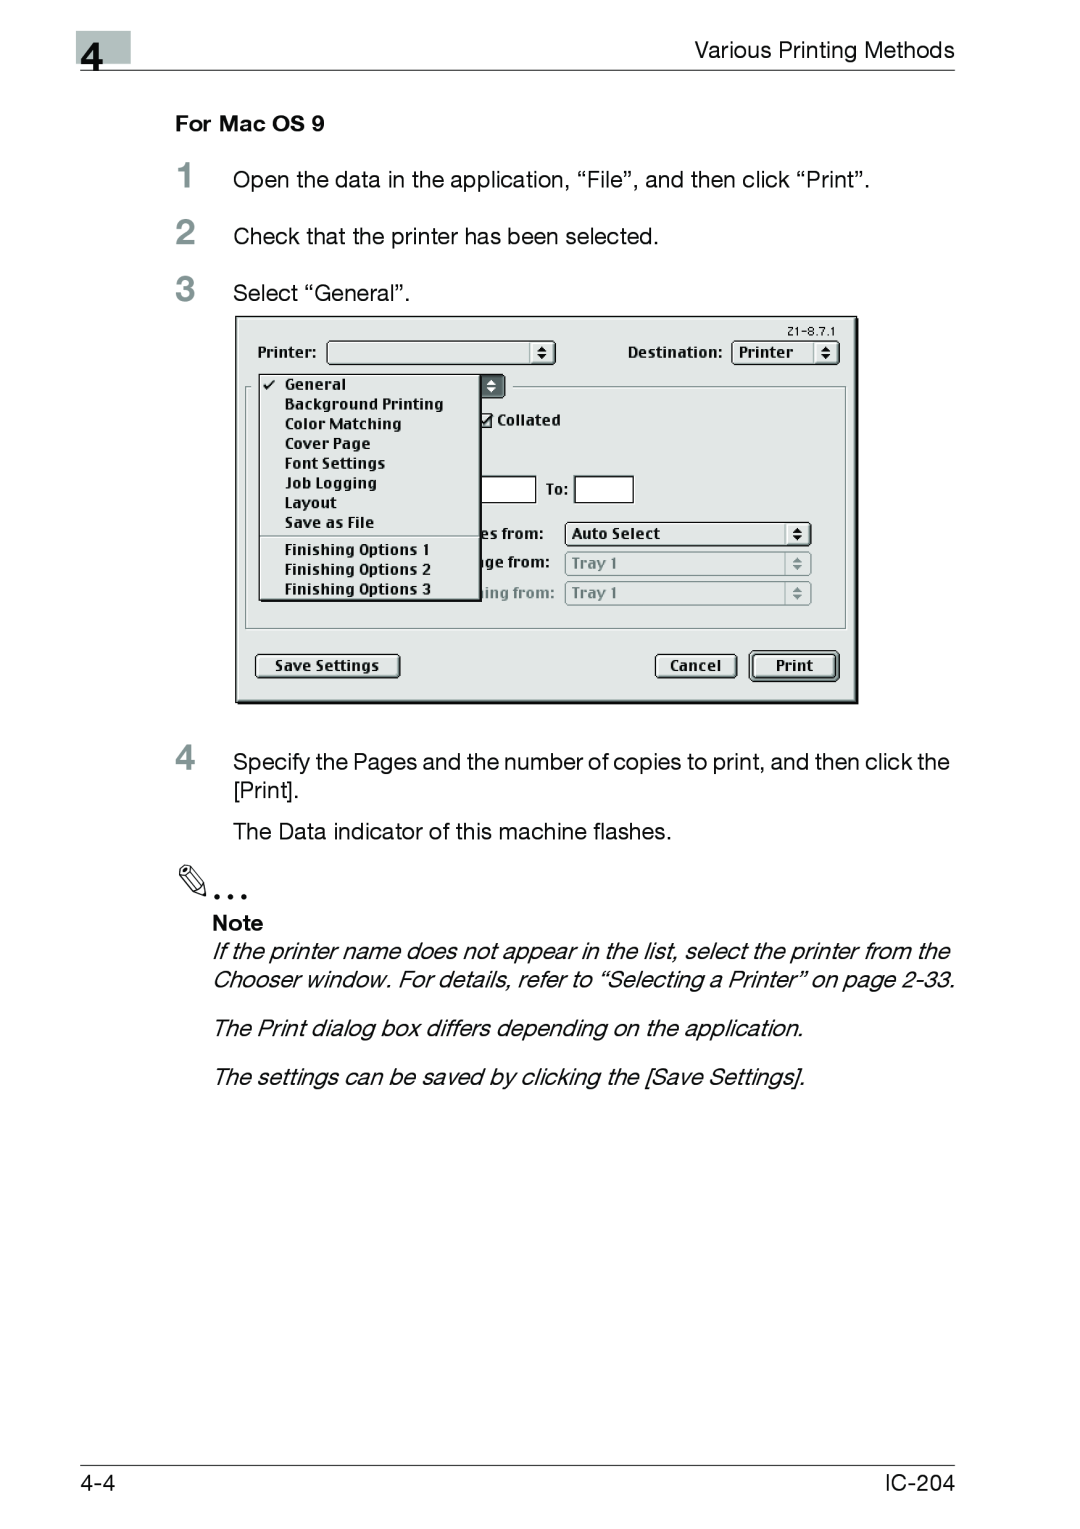 Konica Minolta IC-204 manual Various Printing Methods, For Mac OS 